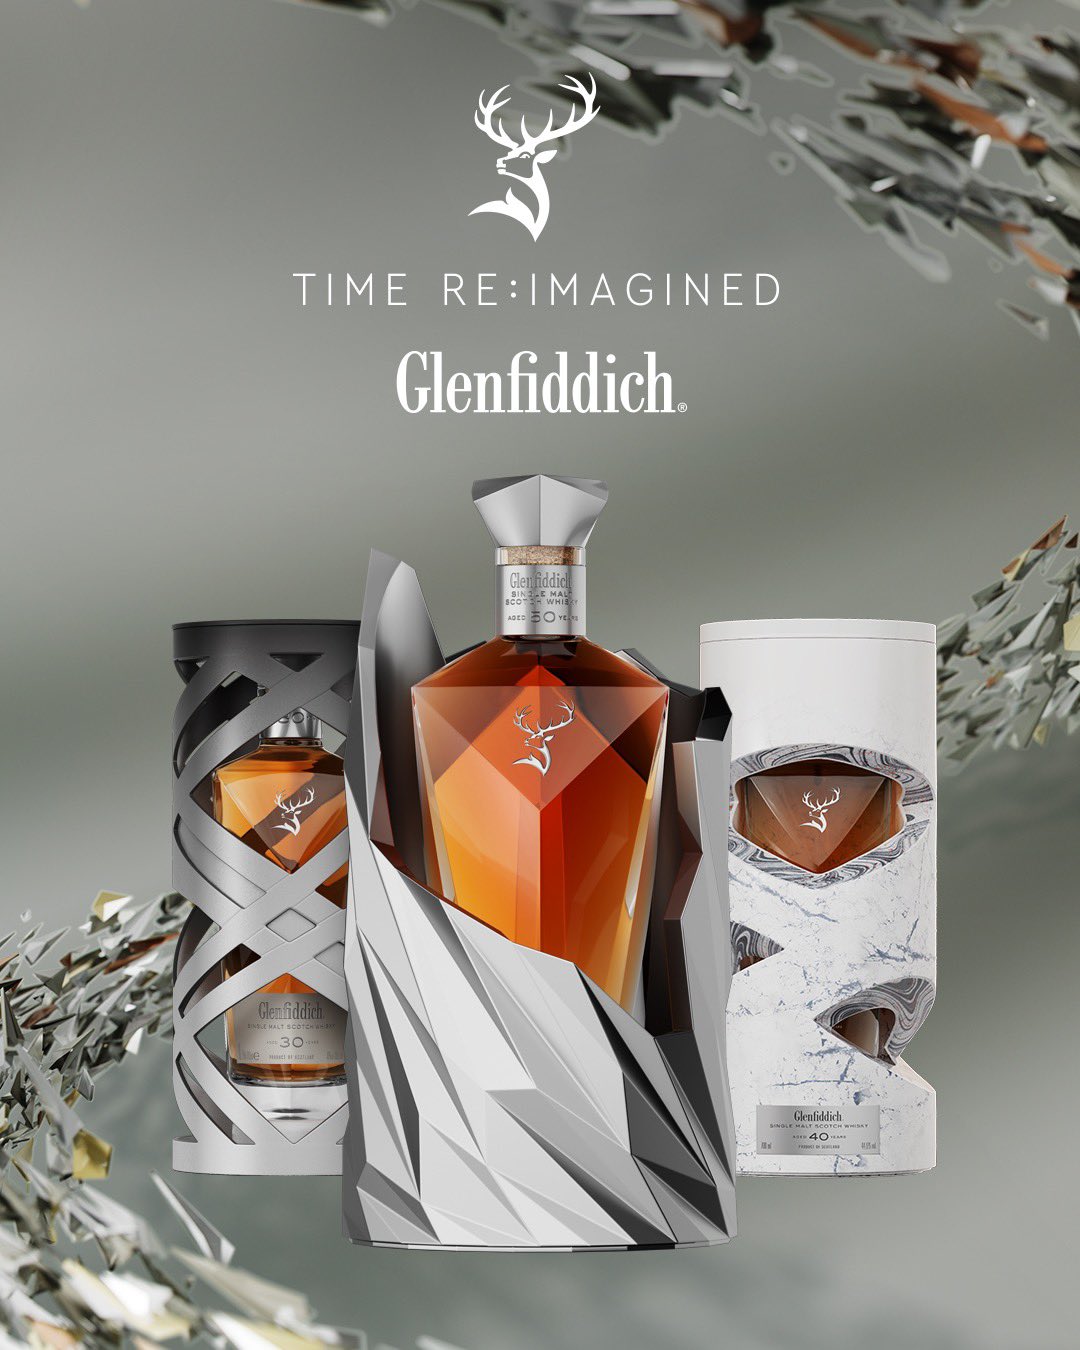 Glenfiddich Whisky (@GlenfiddichSMW) / X